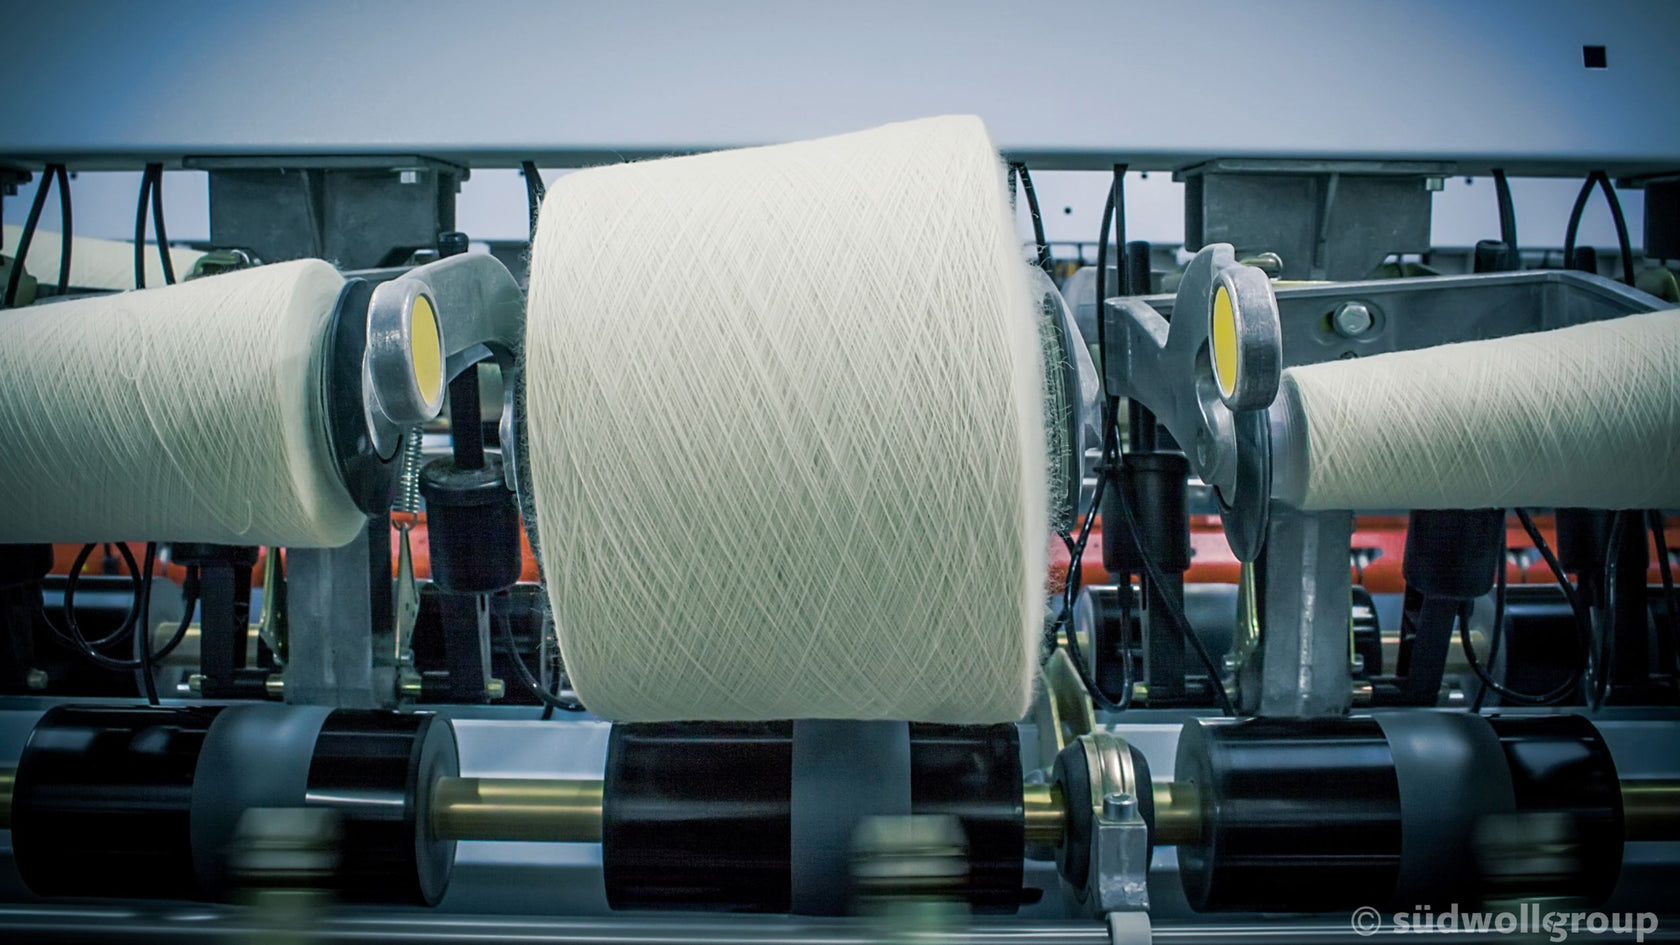 A roll of Merino yarn on an industrial knitting machine.